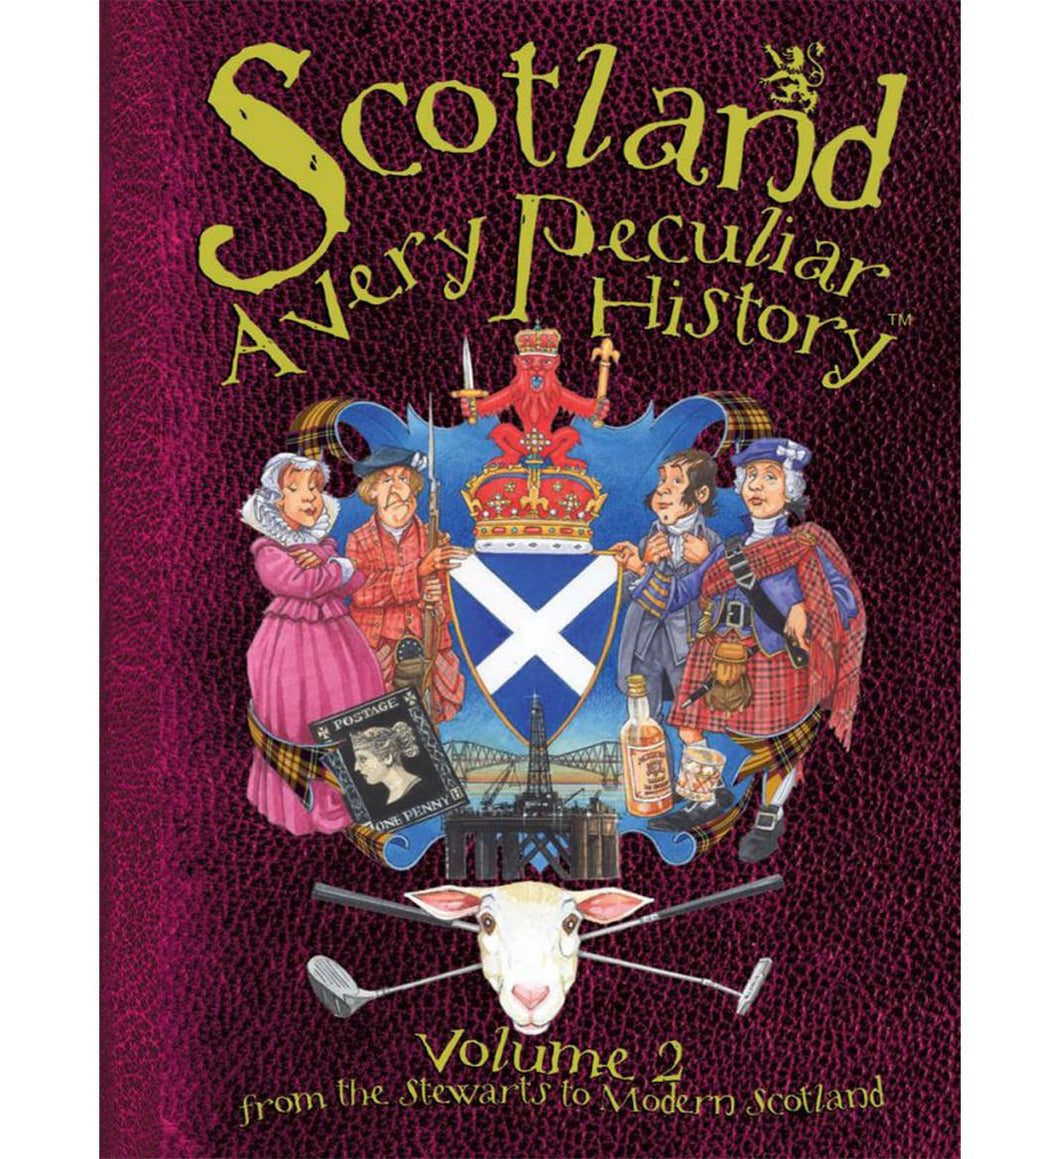 Scotland- A Very Peculiar History Volume 2